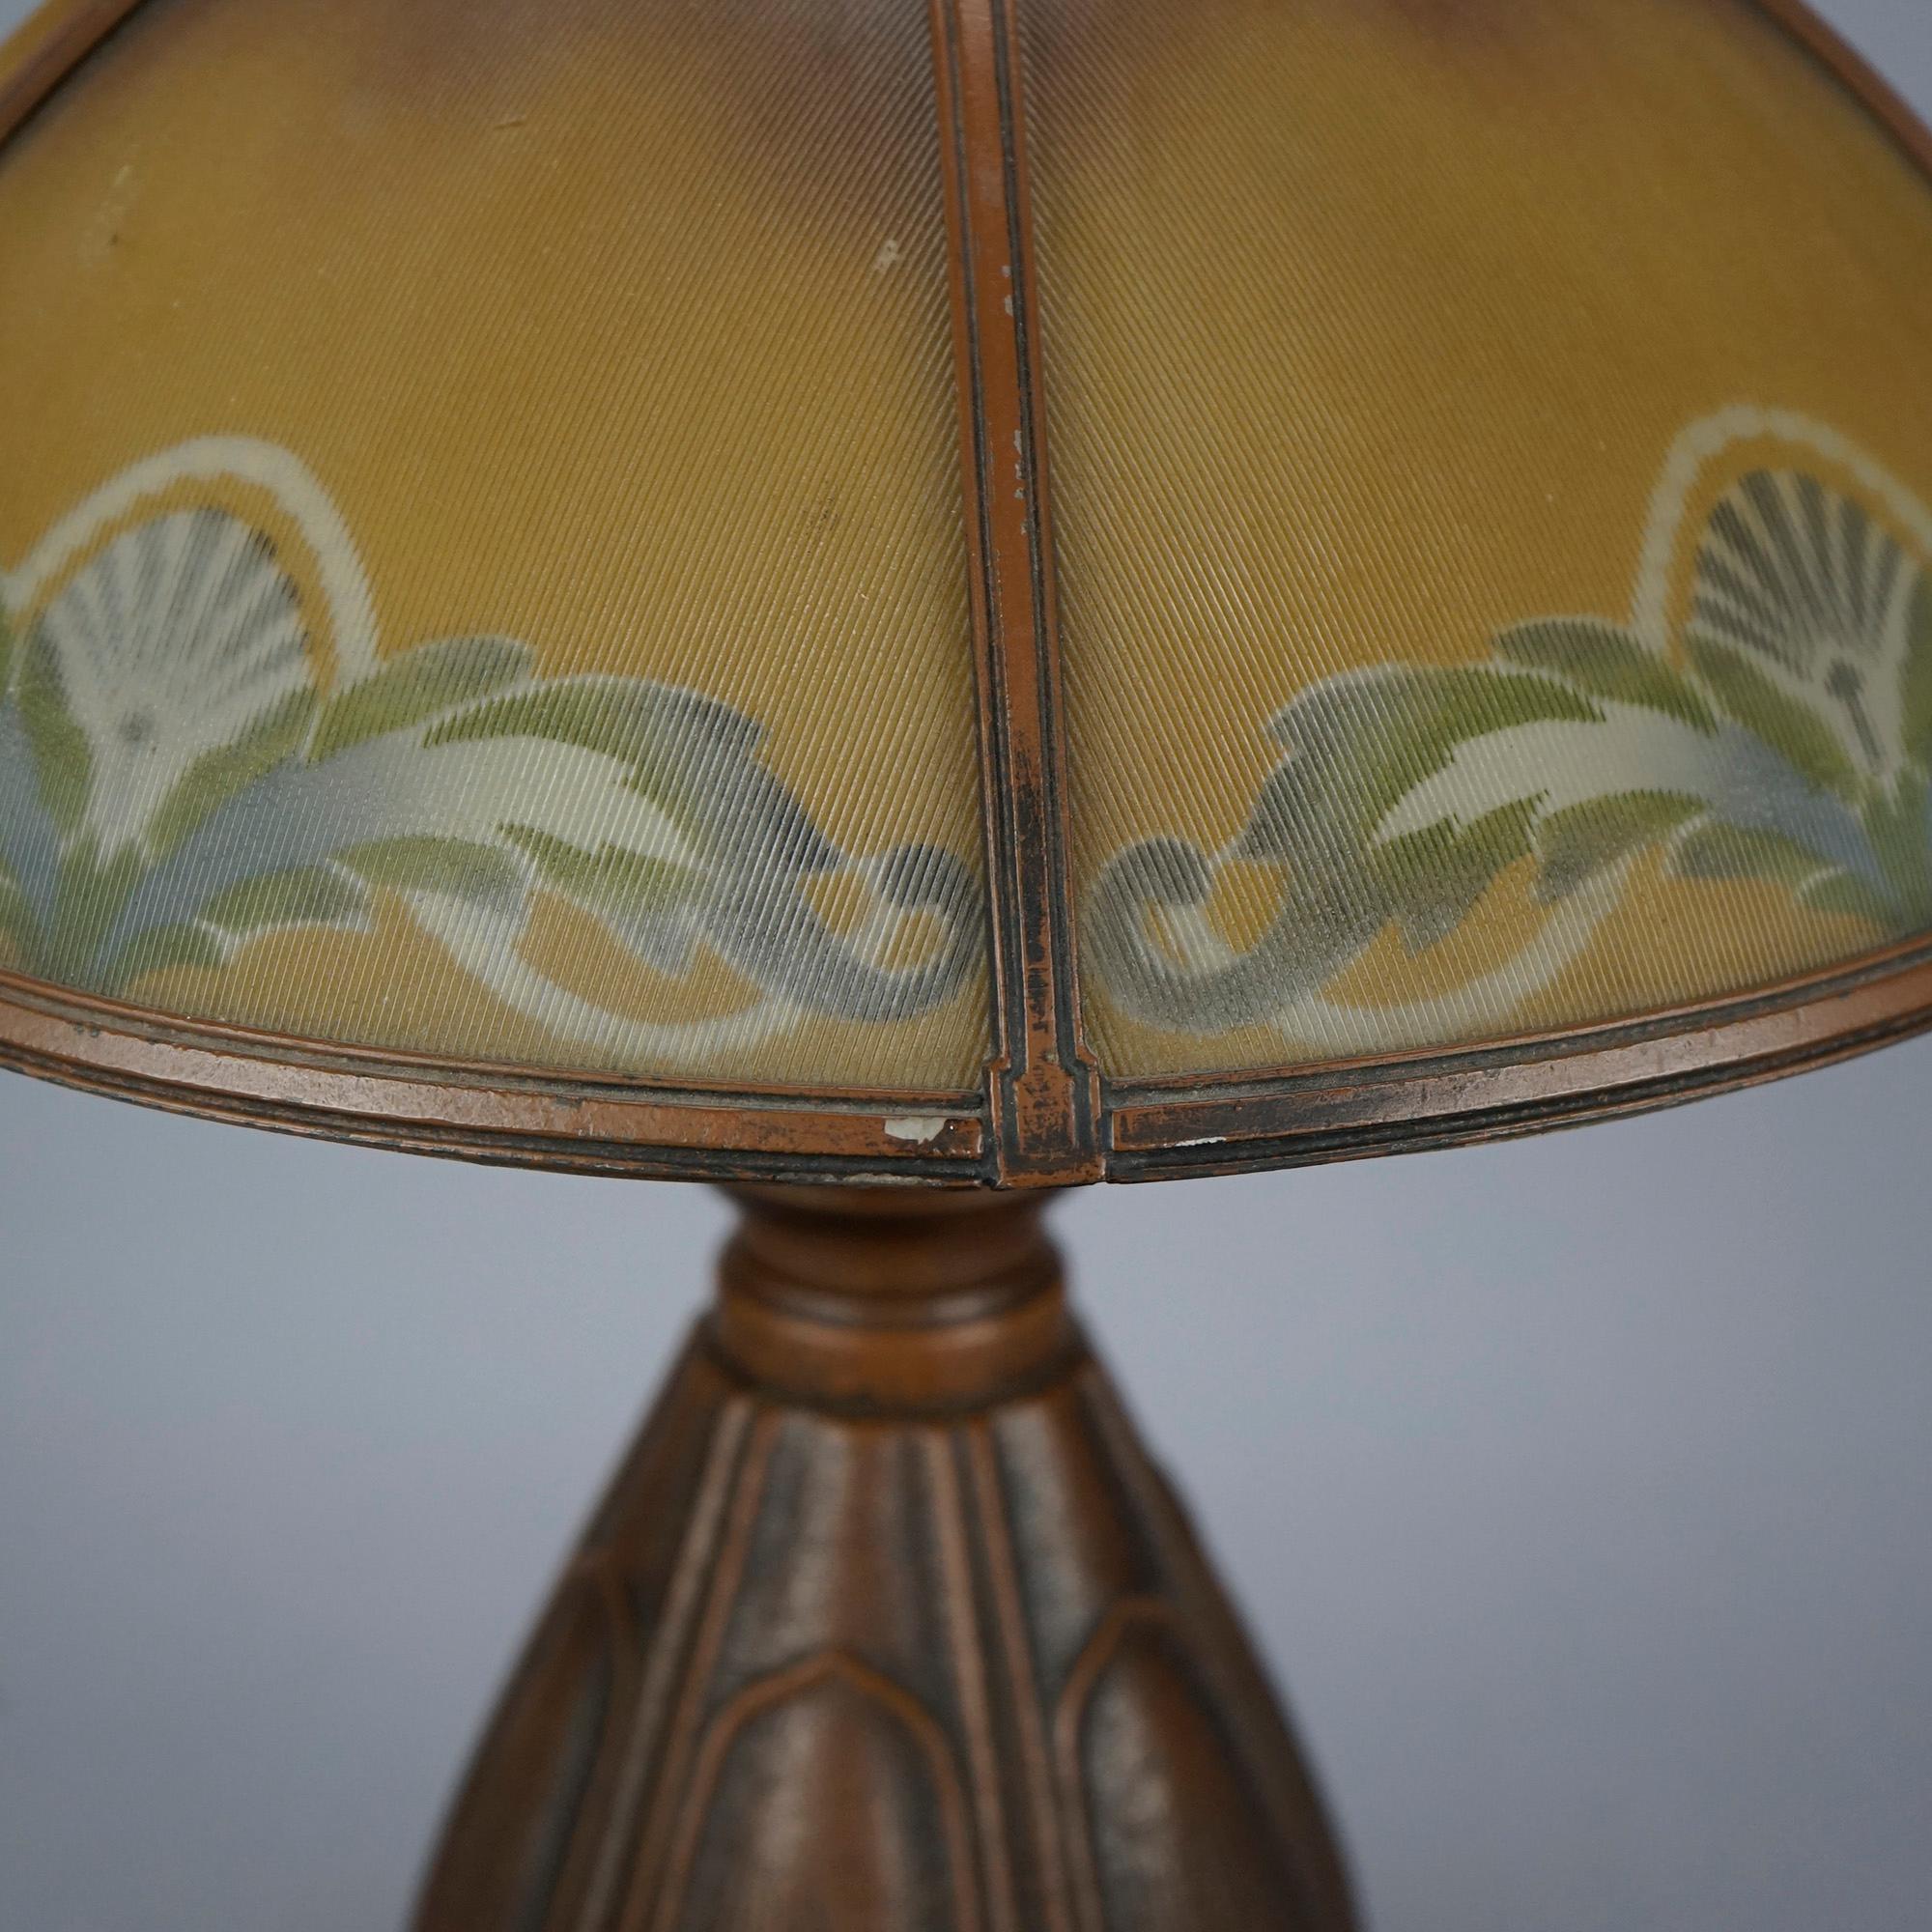 American Antique Arts & Crafts Bradley & Hubbard Lamp & Reverse Painted Shade, C1910